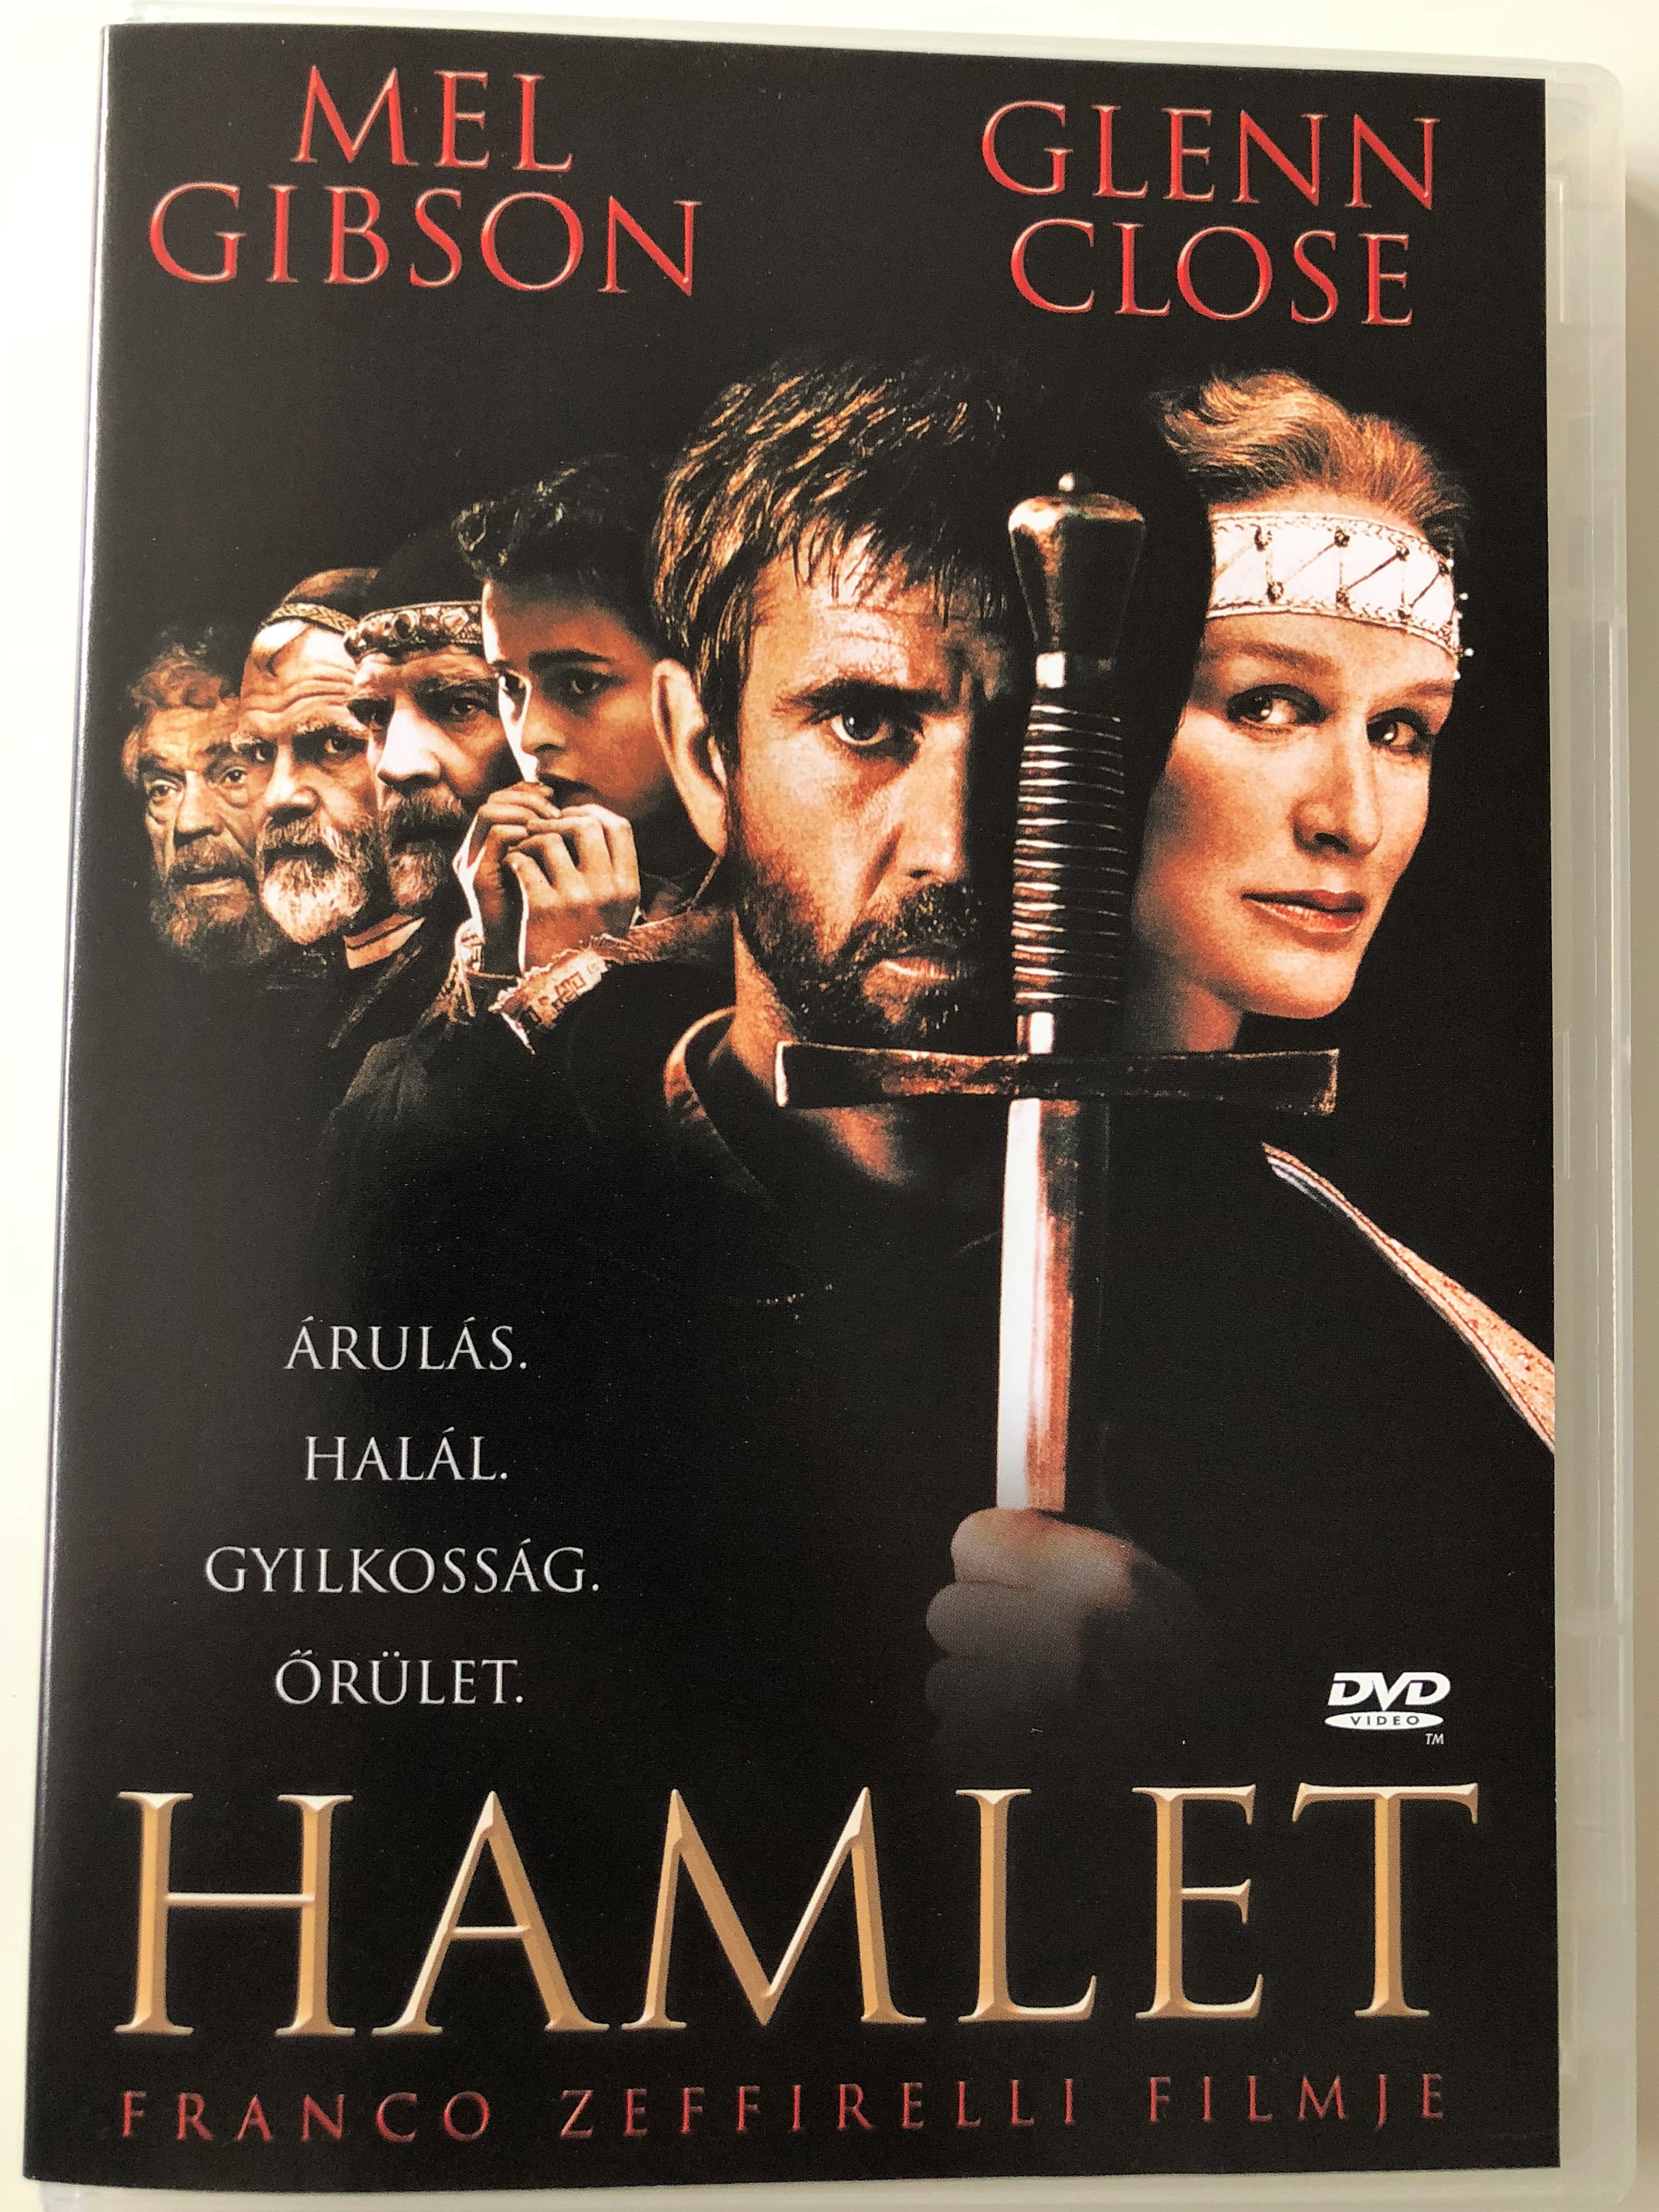 hamlet-dvd-1990-directed-by-franco-zeffirelli-starring-mel-gibson-glenn-close-w.-shakespeare-classic-film-adaptation-1-.jpg